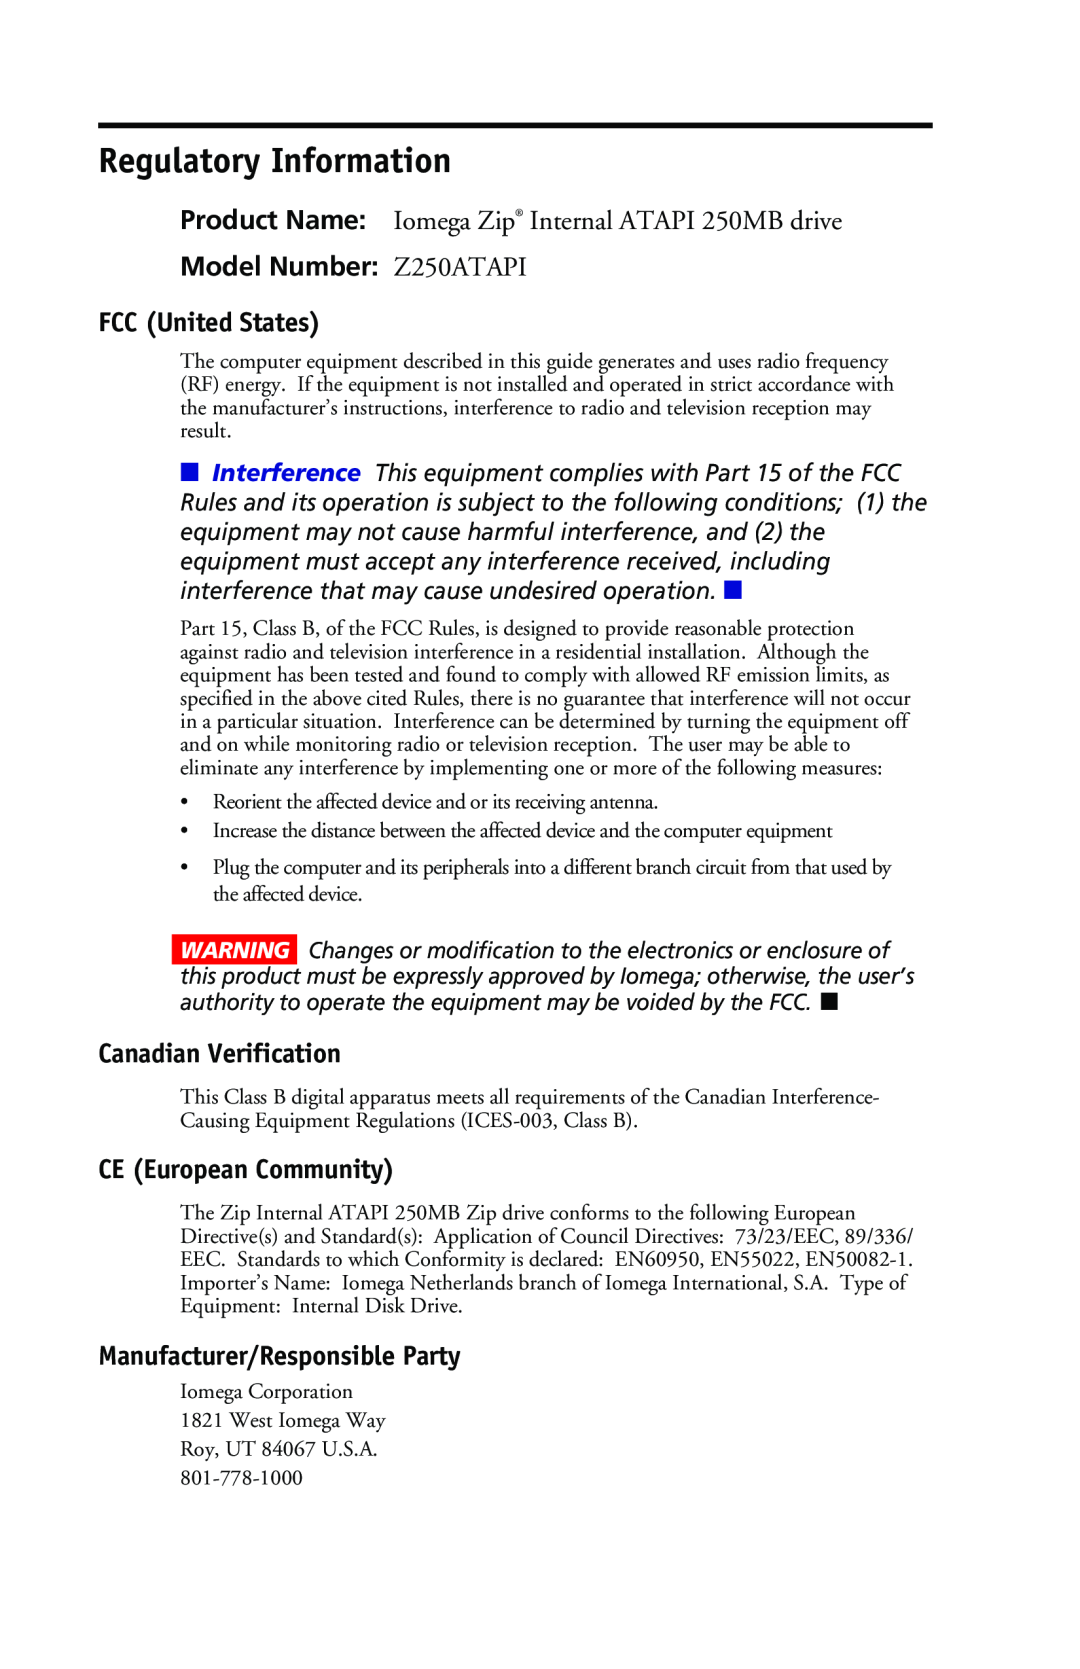 Iomega 03798300 owner manual Regulatory Information, Model Number Z250ATAPI FCC United States, Canadian Verification 